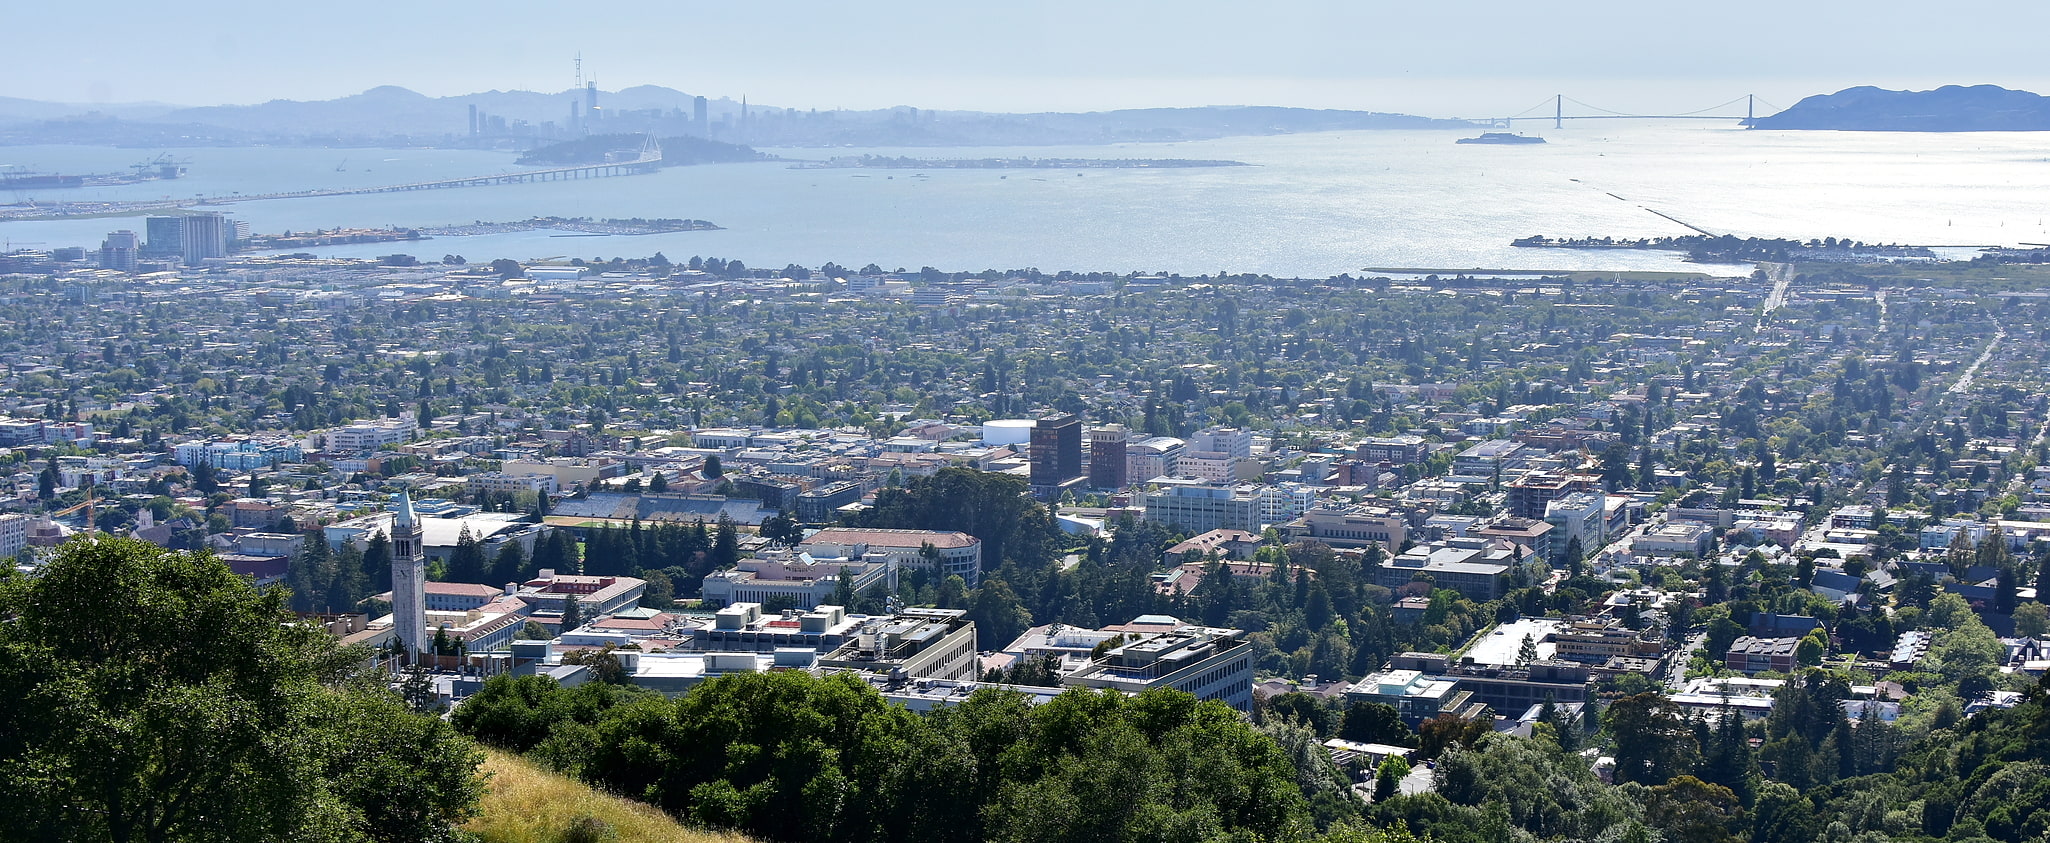 Berkeley, United States